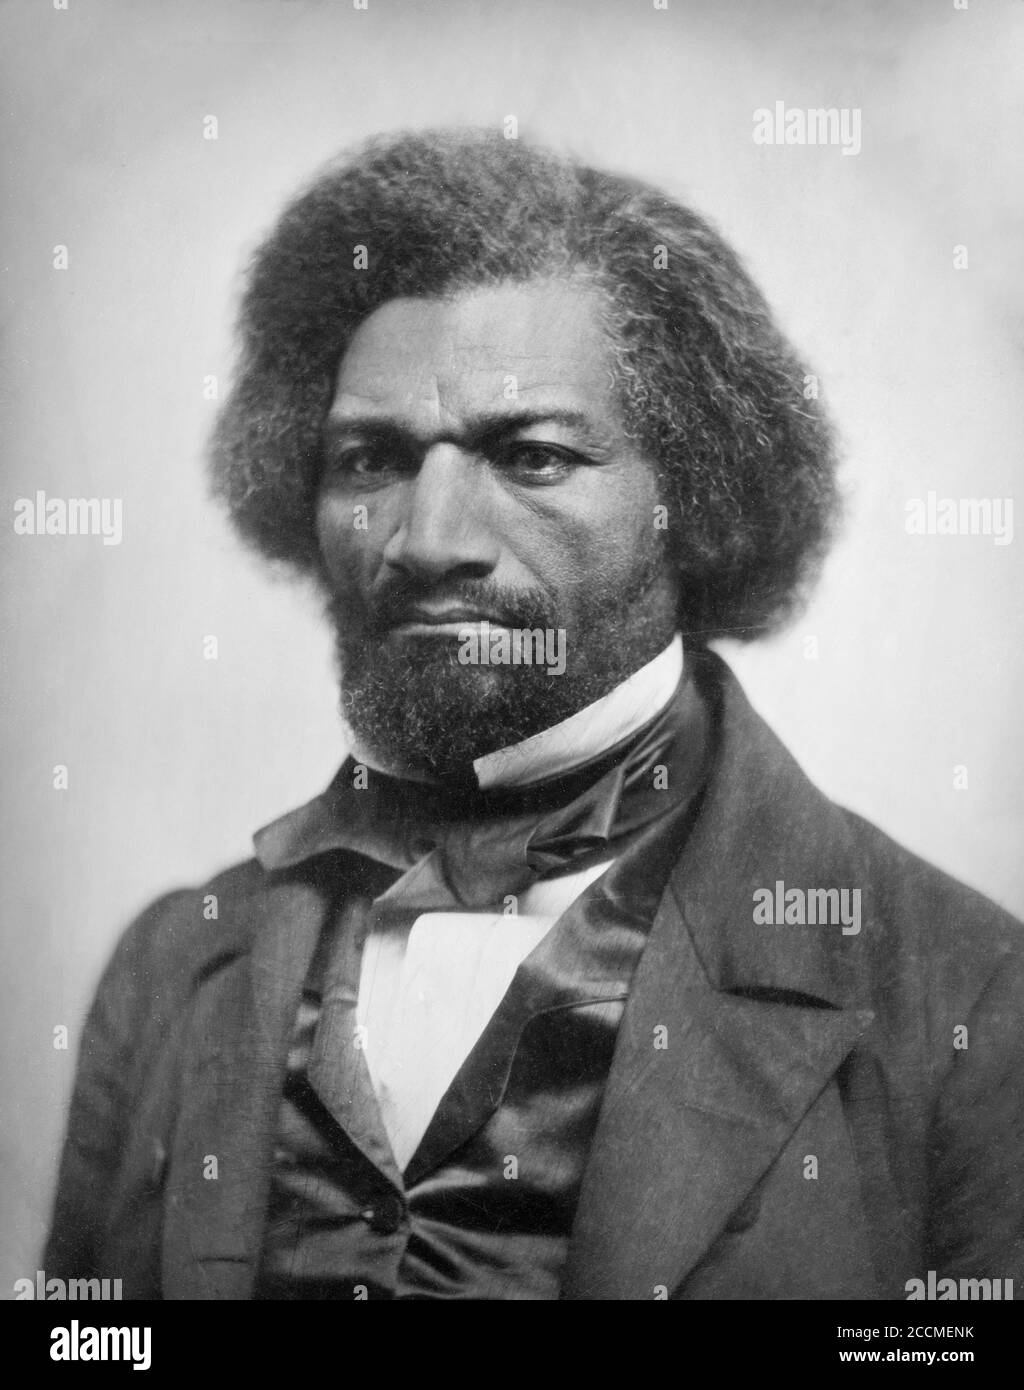 Frederick Douglass portrait, daguerrotype, 1856. Douglass (1818-1895), a former slave, was an American social reformer, abolitionist, orator, writer, and statesman Stock Photo